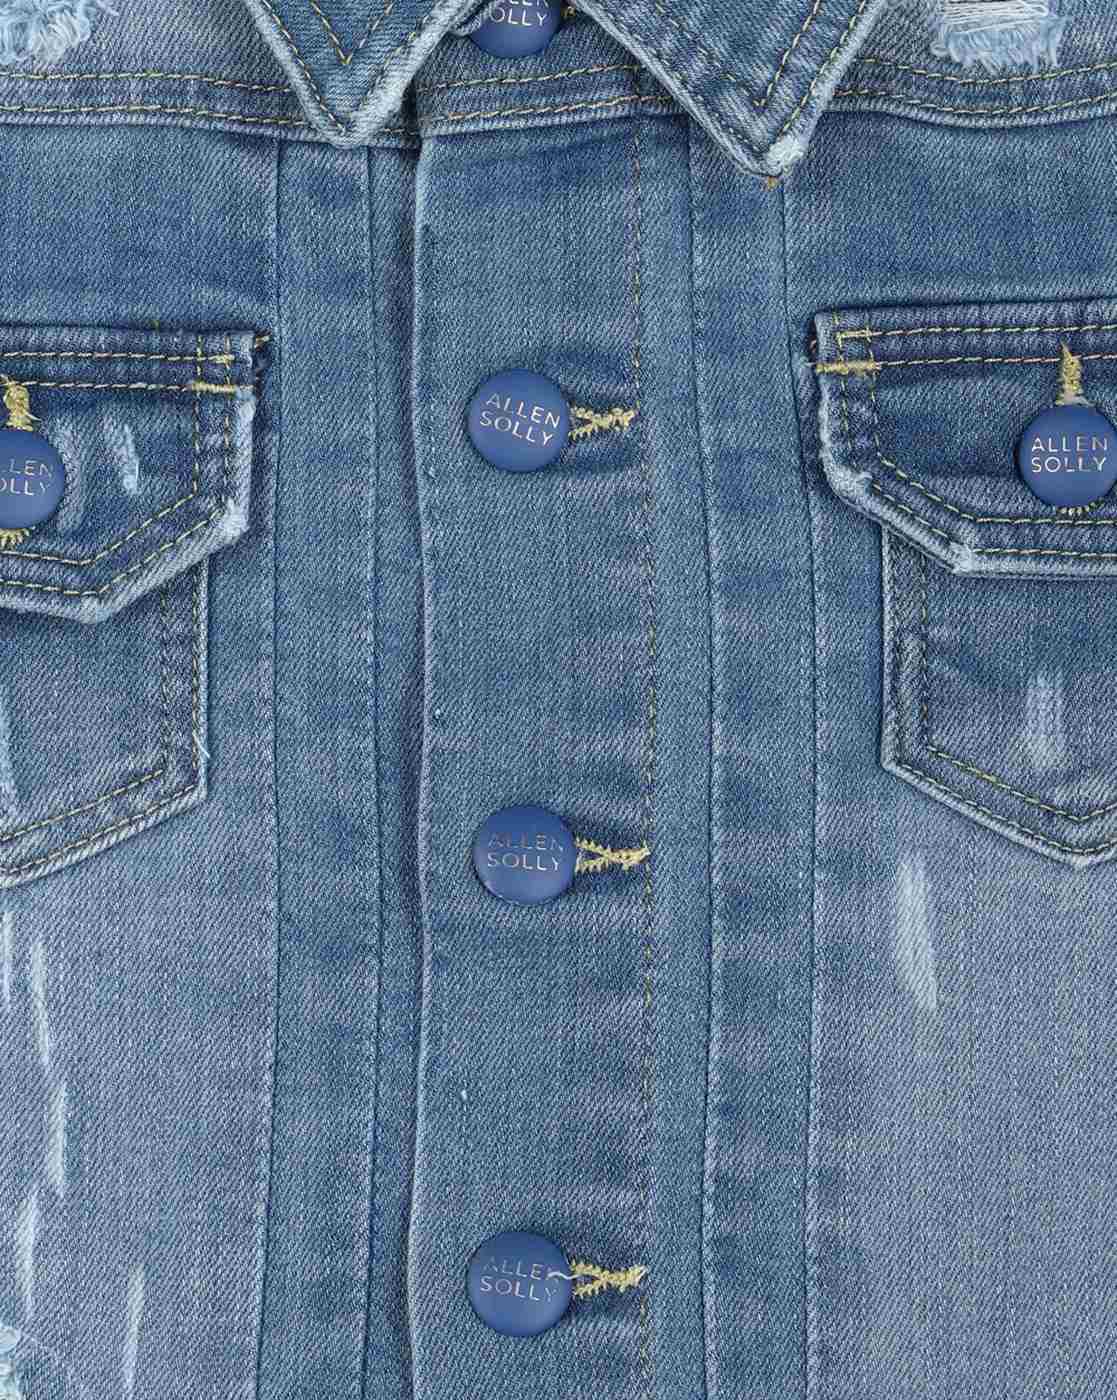 Buy Peter England Jeans Navy Blue Jacket online